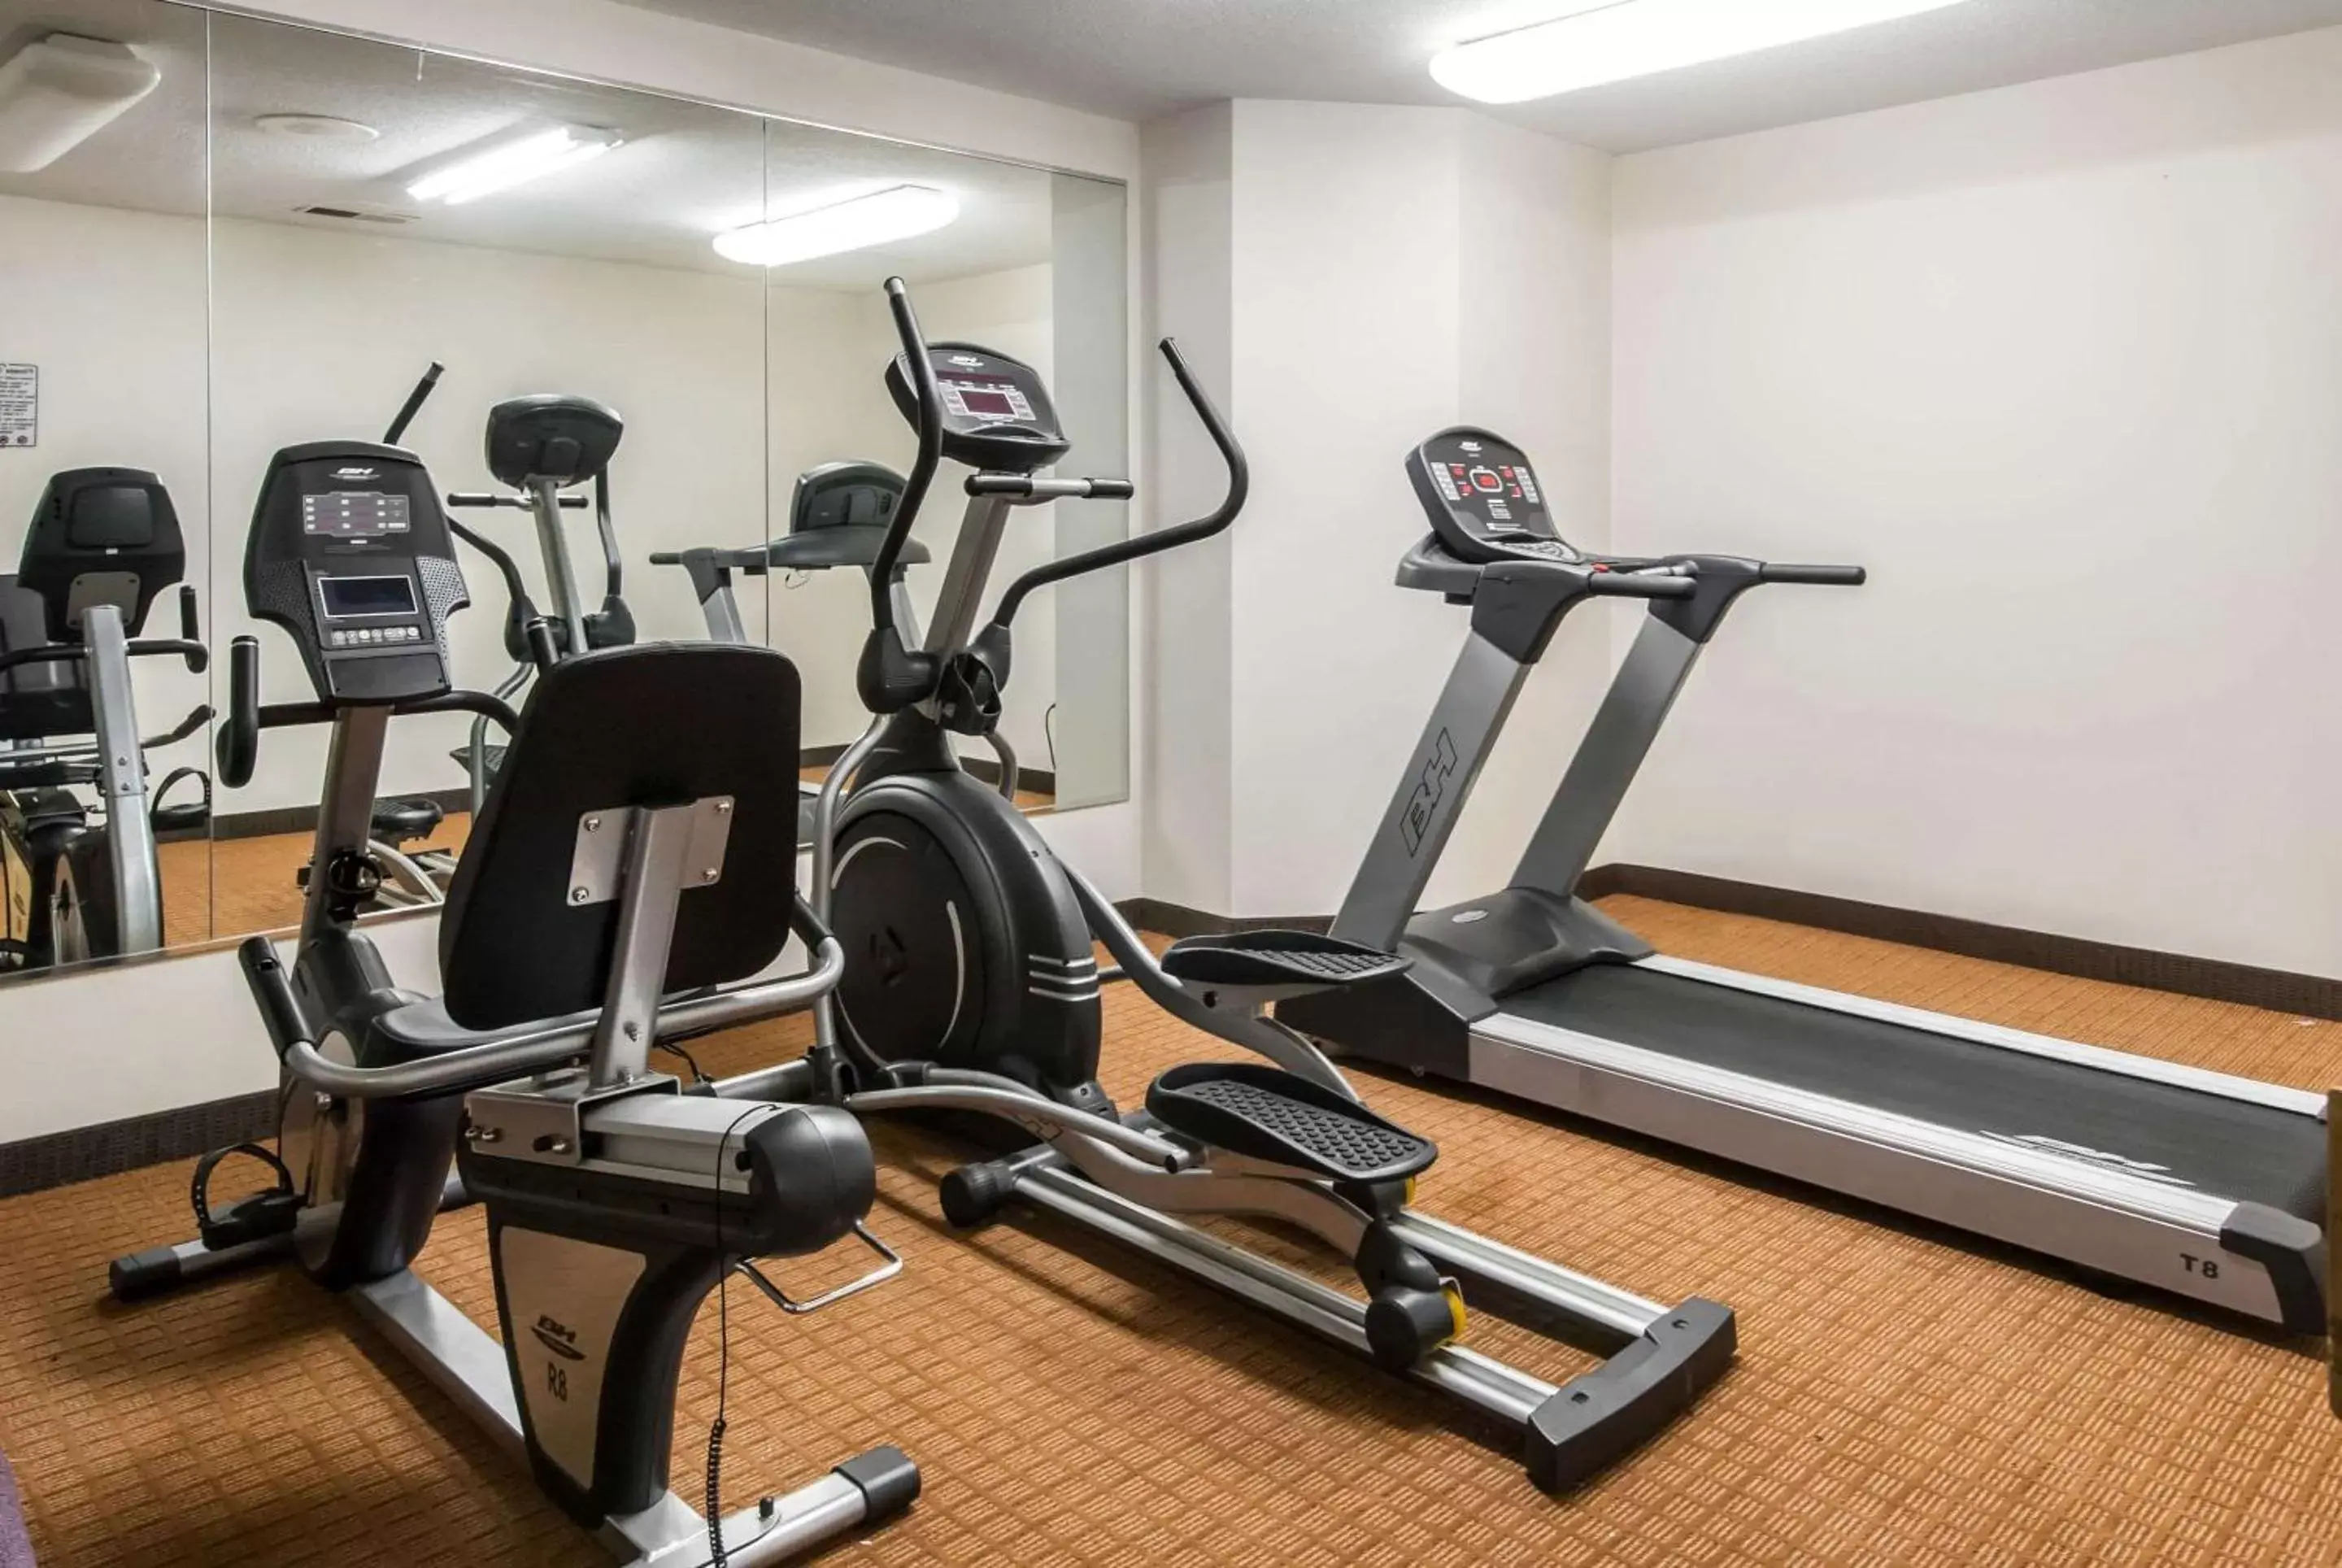 Fitness centre/facilities, Fitness Center/Facilities in Sleep Inn Saint Charles